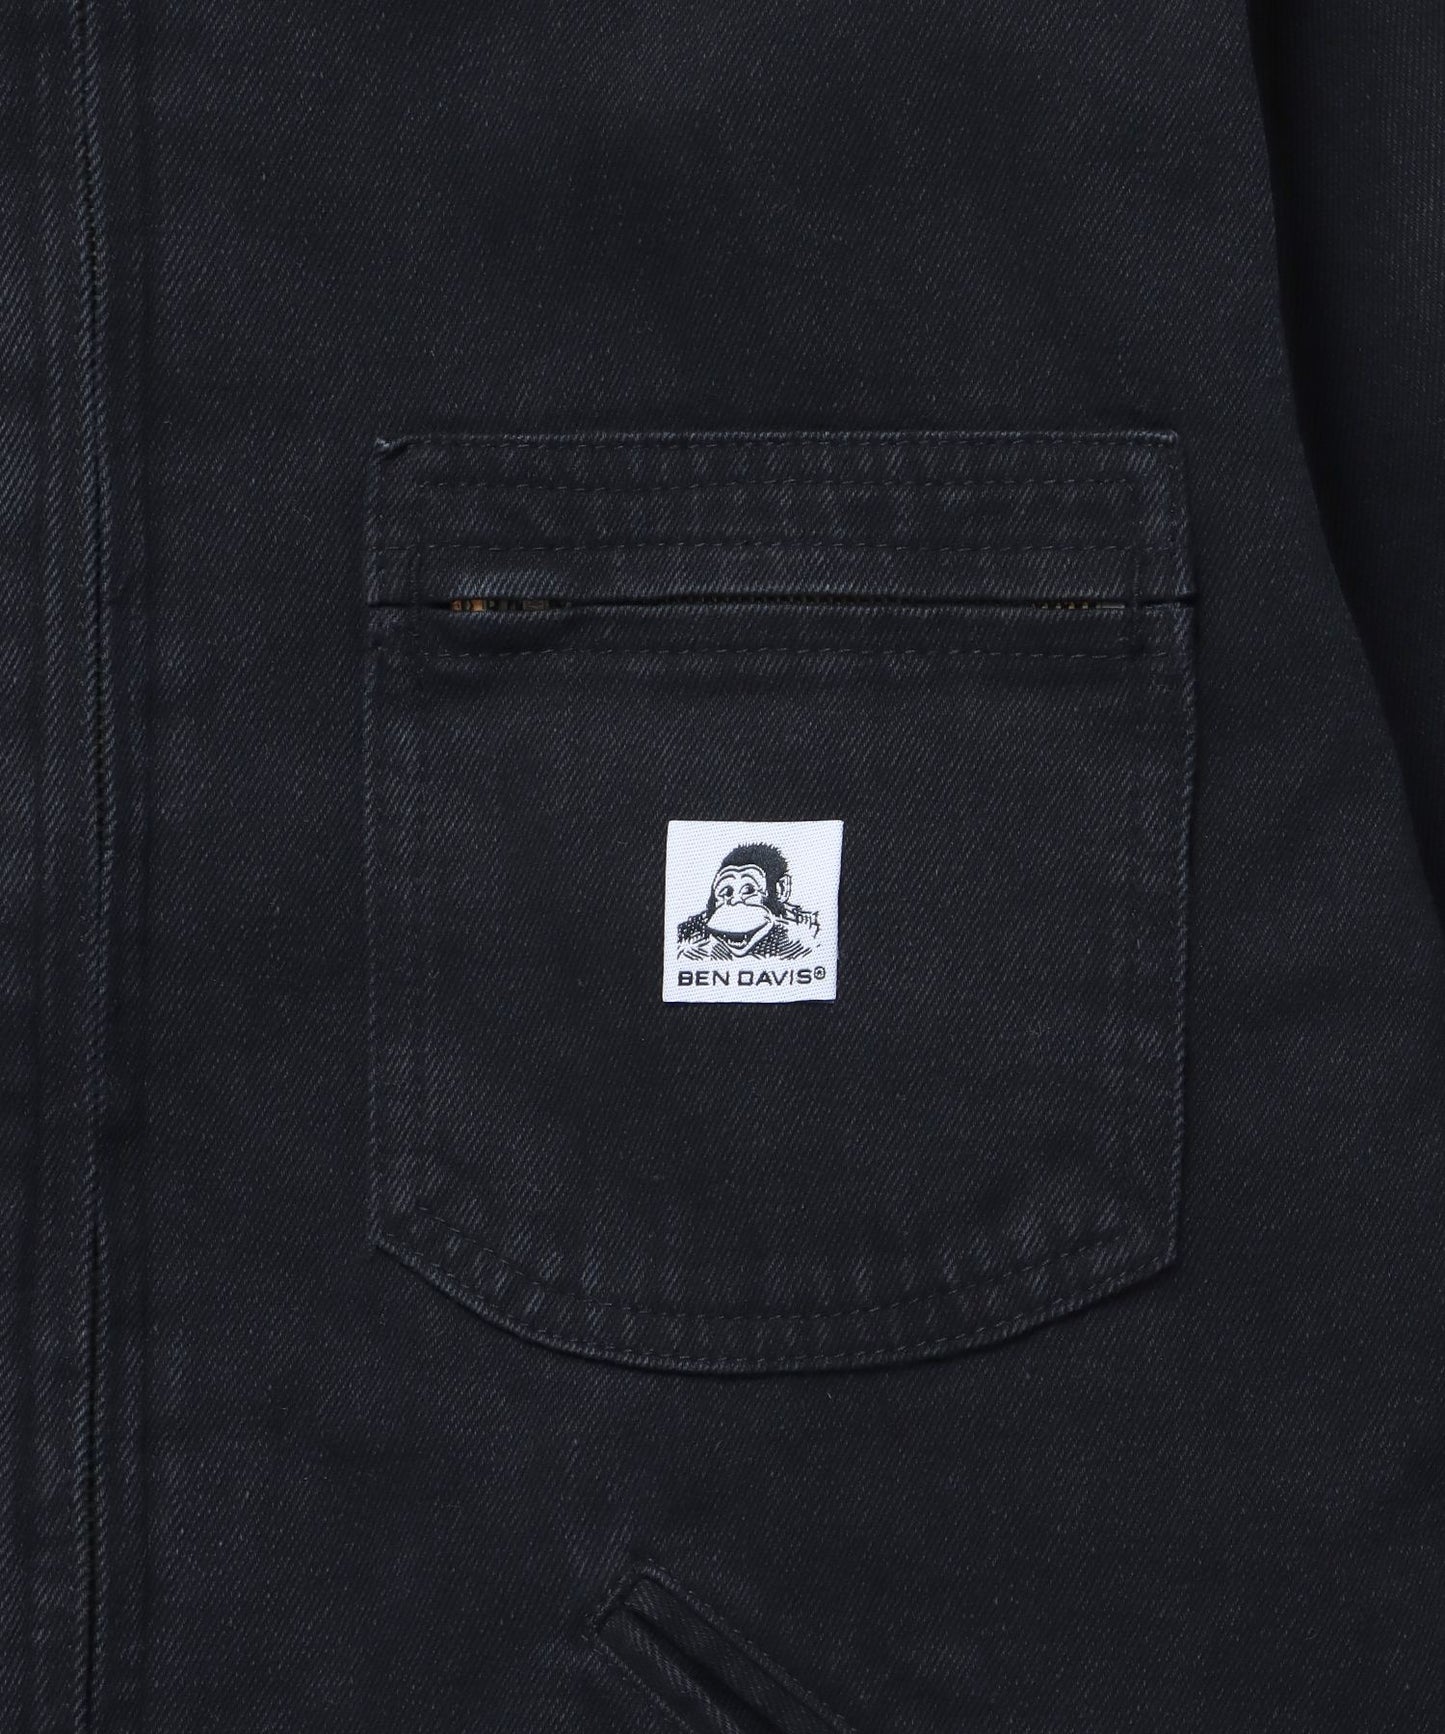 【BEN DAVIS(ベンデイビス)】 BLEACHED QUENTIN JACKET / ワイド ジップ ロゴ 刺繍 ジャケット ブラック